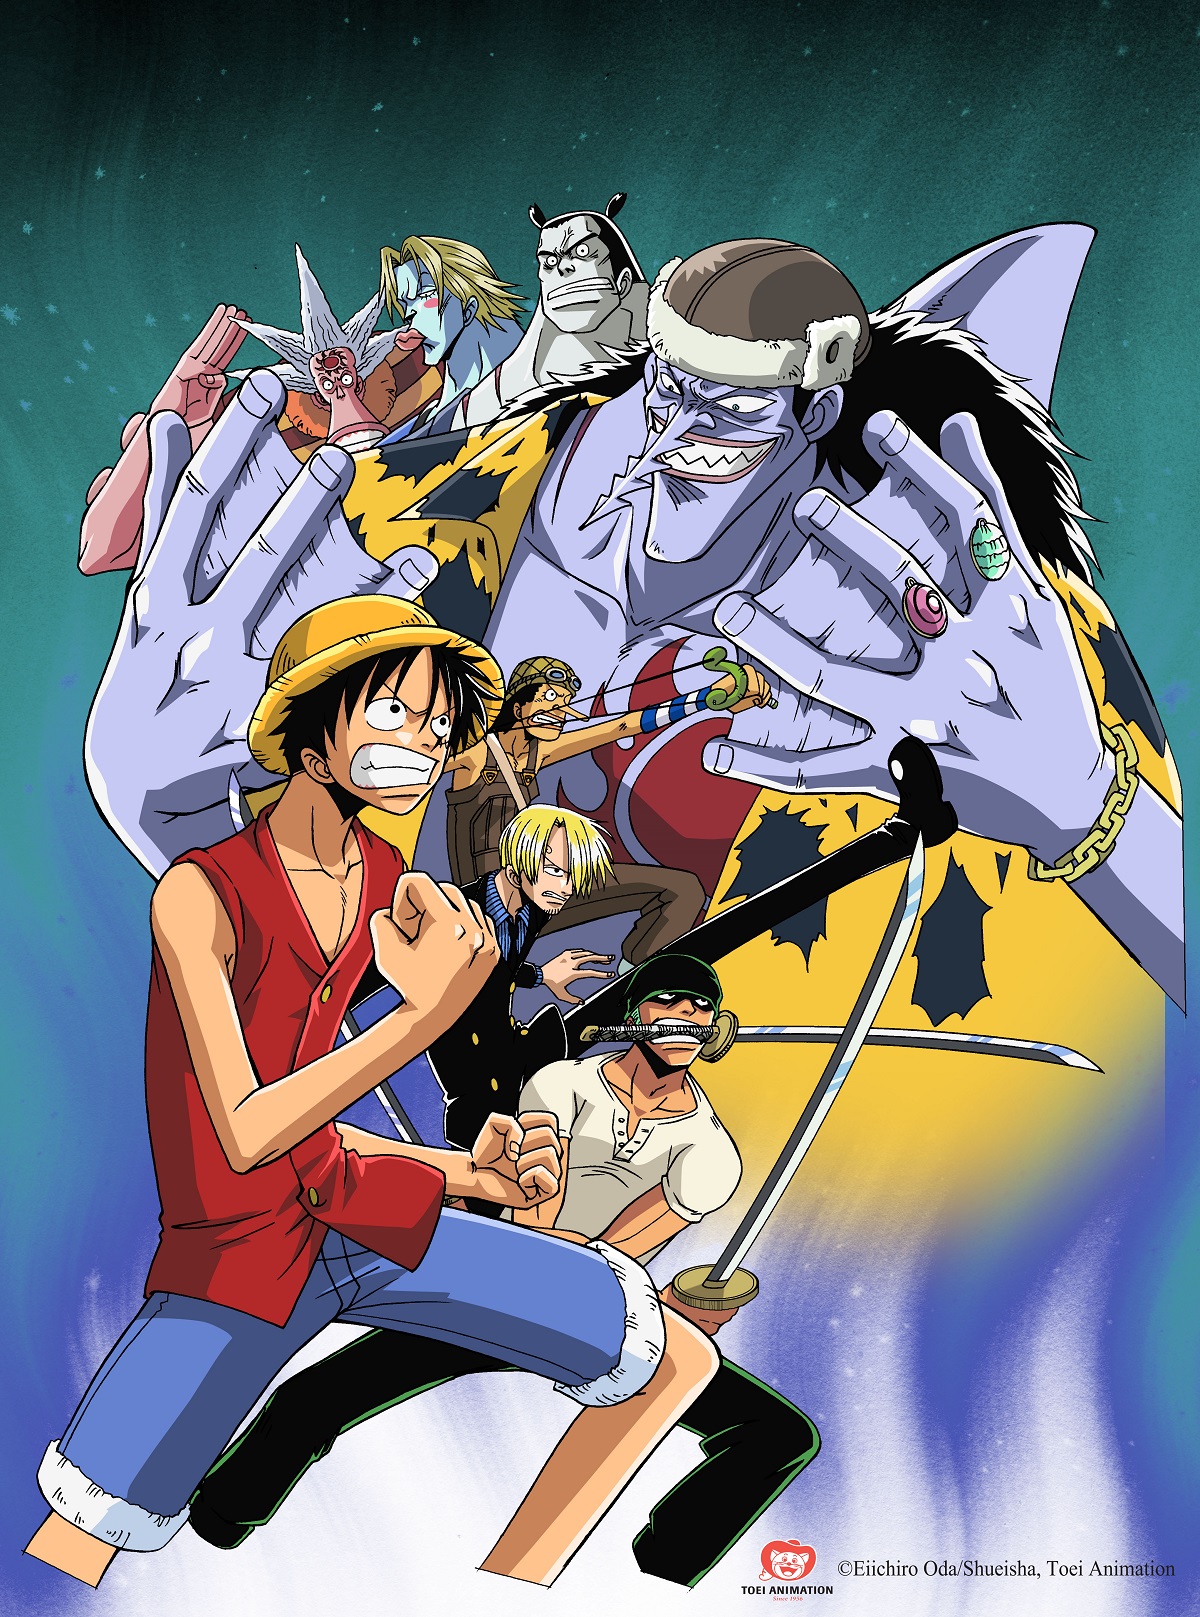 One Piece Wiki - Tổng hợp thông tin về One Piece - POPS Blog